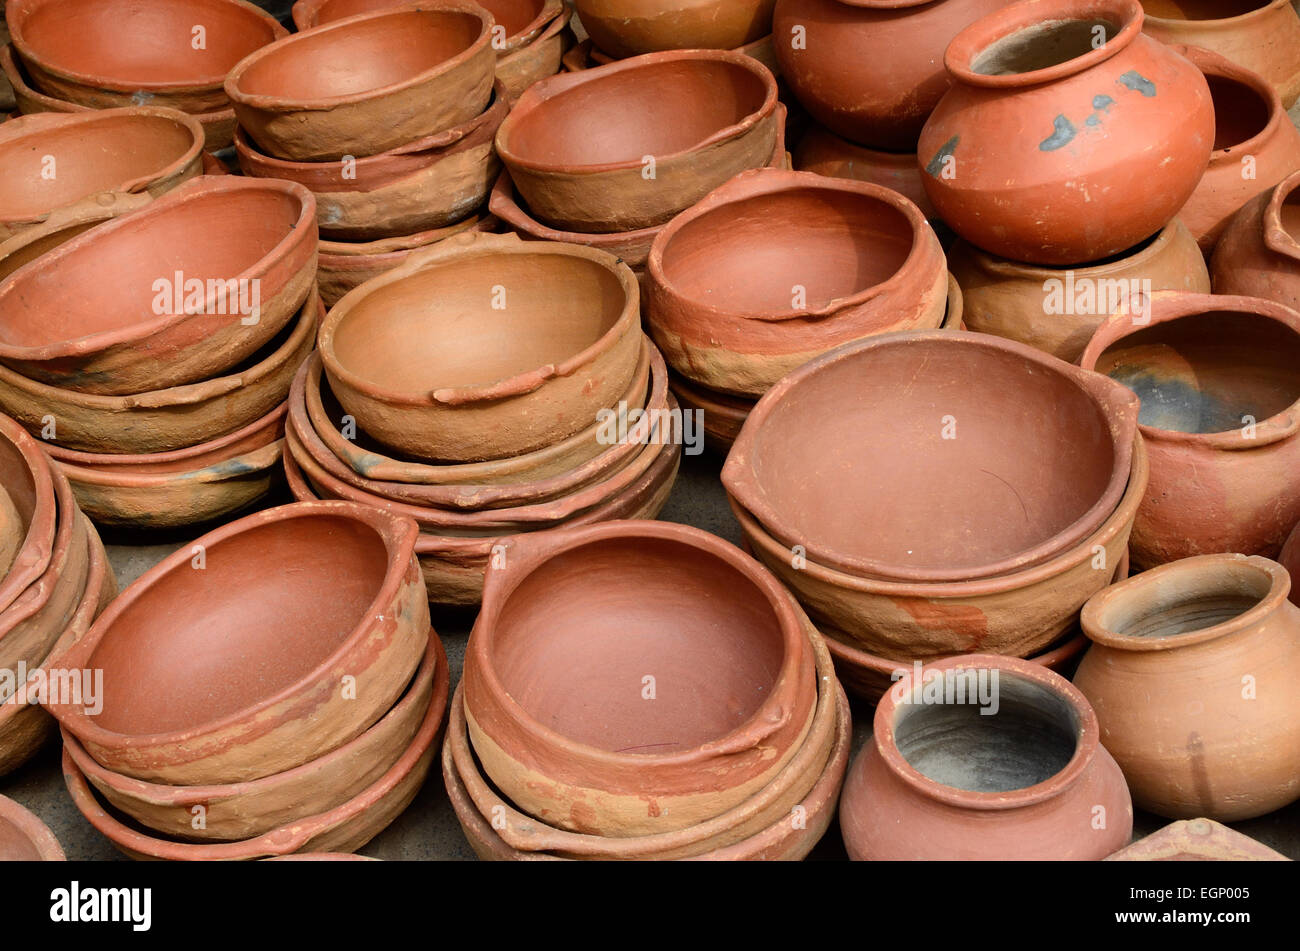 https://c8.alamy.com/comp/EGP005/indian-clay-cooking-pots-orchha-madhya-pradesh-india-EGP005.jpg